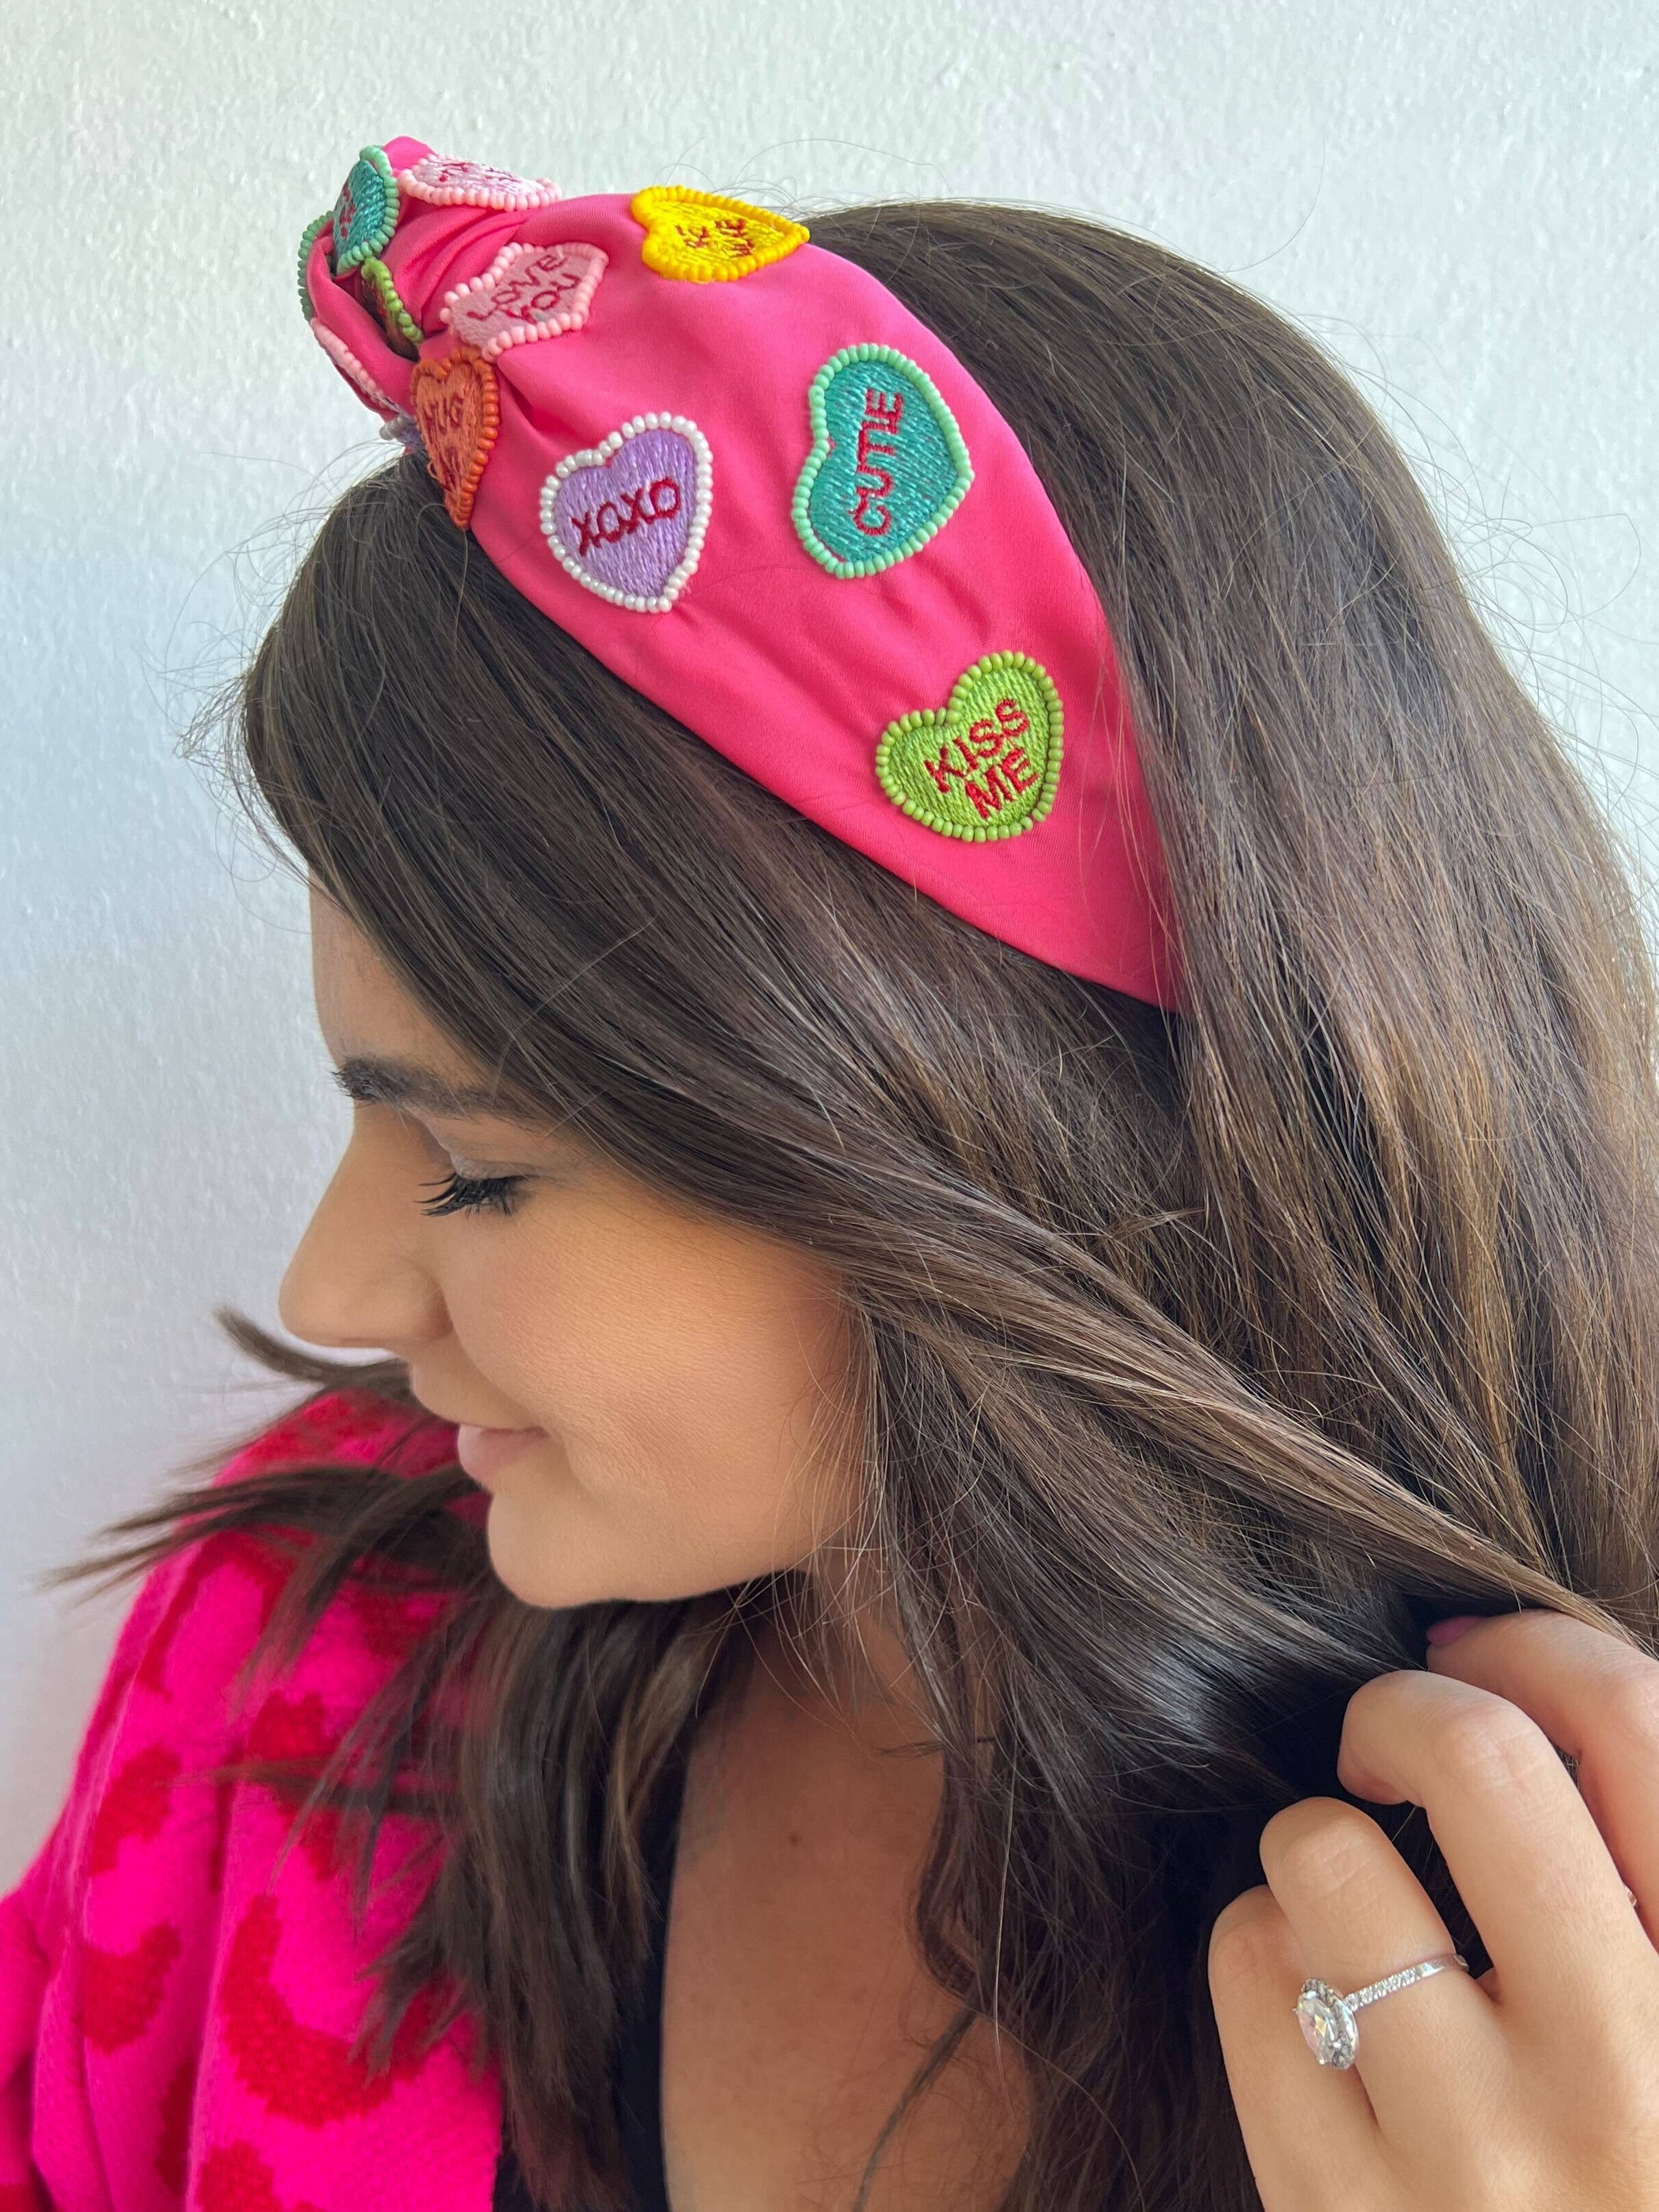 Conversation Heart Embroidered Headband - Pink - Pretty Crafty Lady Shop